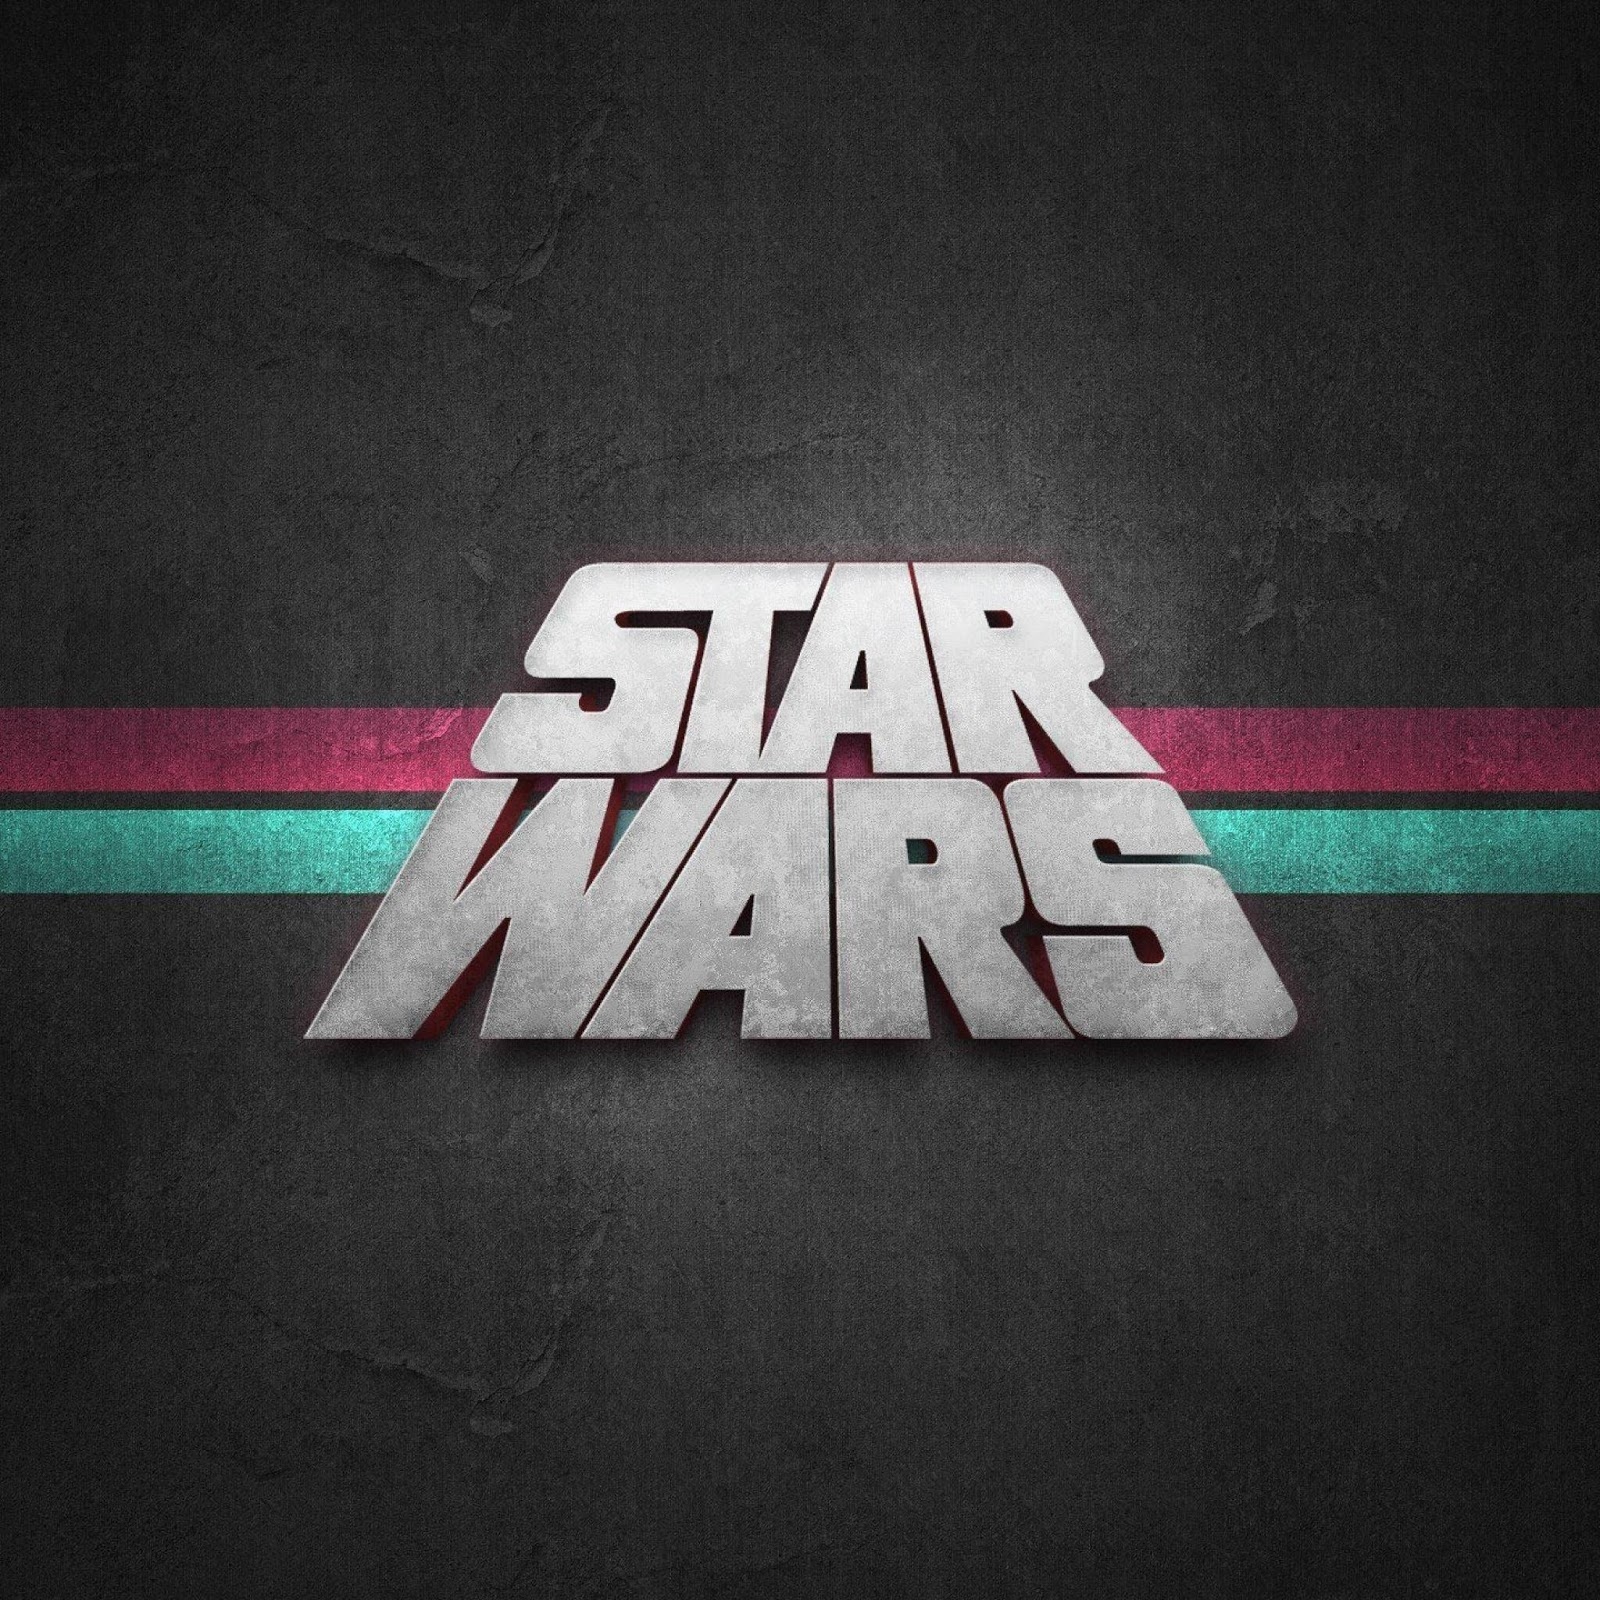 Star Wars wallpapers for iPad - Star Wars Wallpaper HD